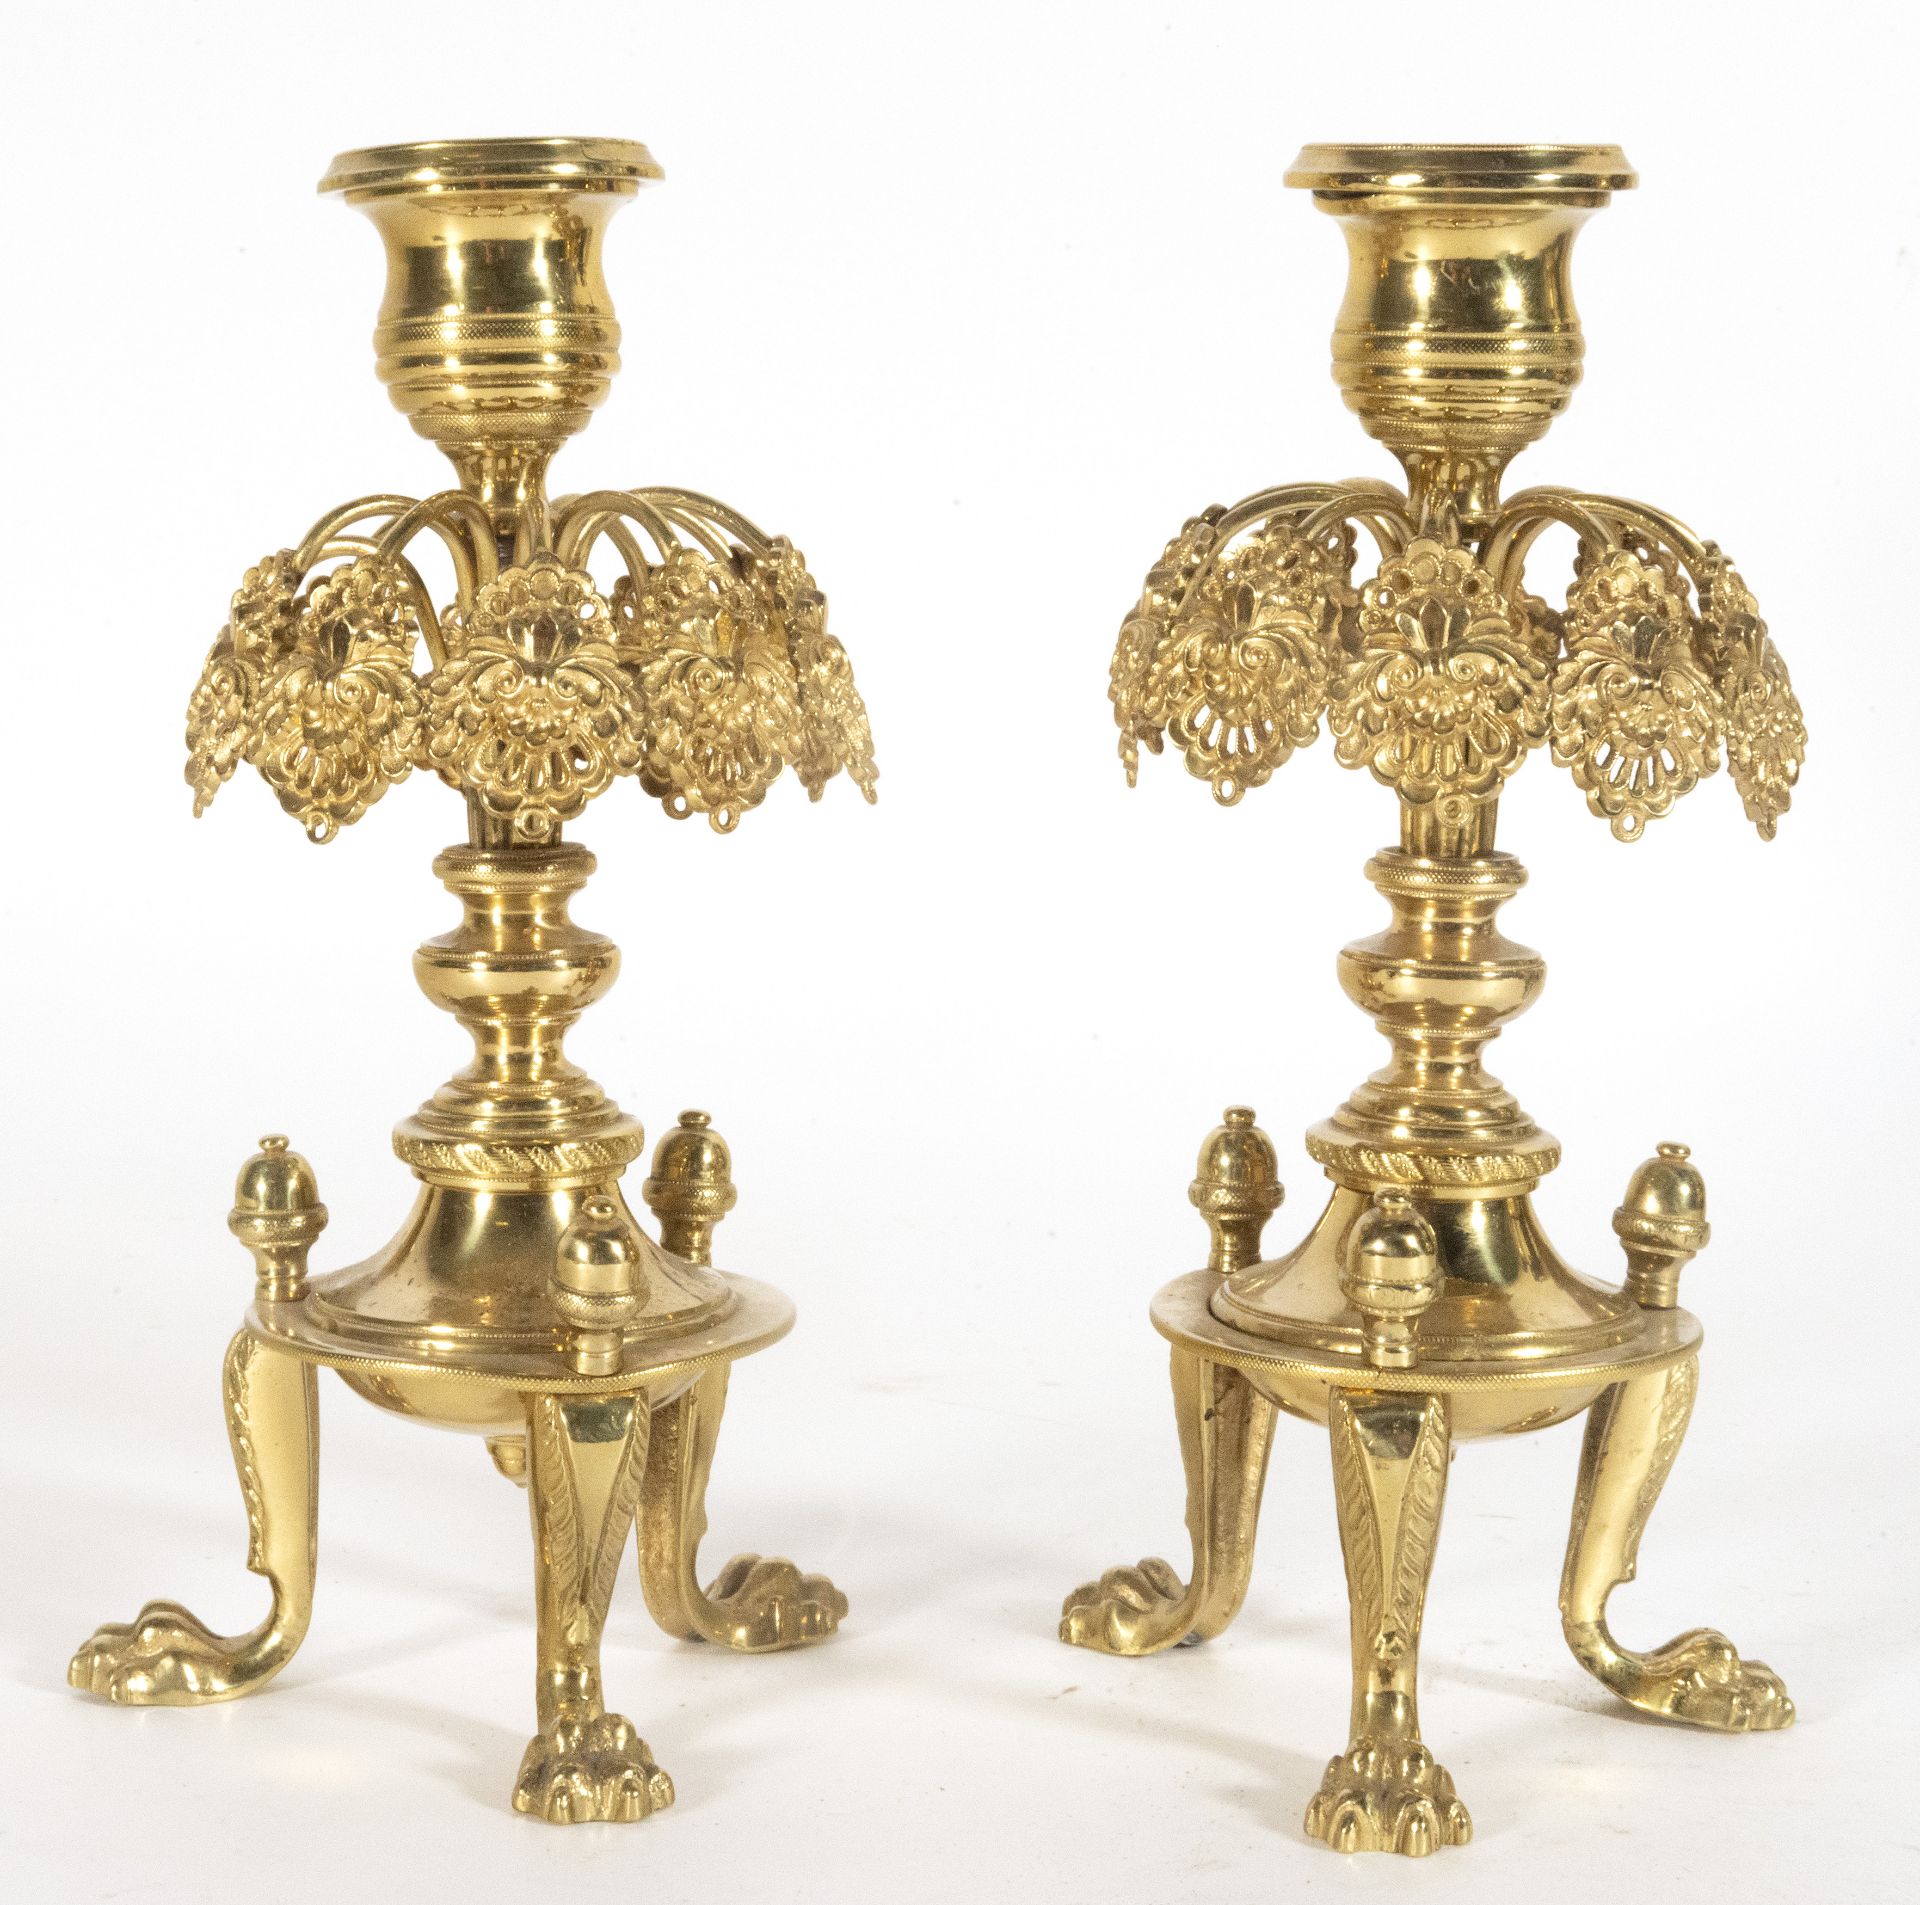 Pair of Victorian English rotating gilt bronze candelabras, 19th century